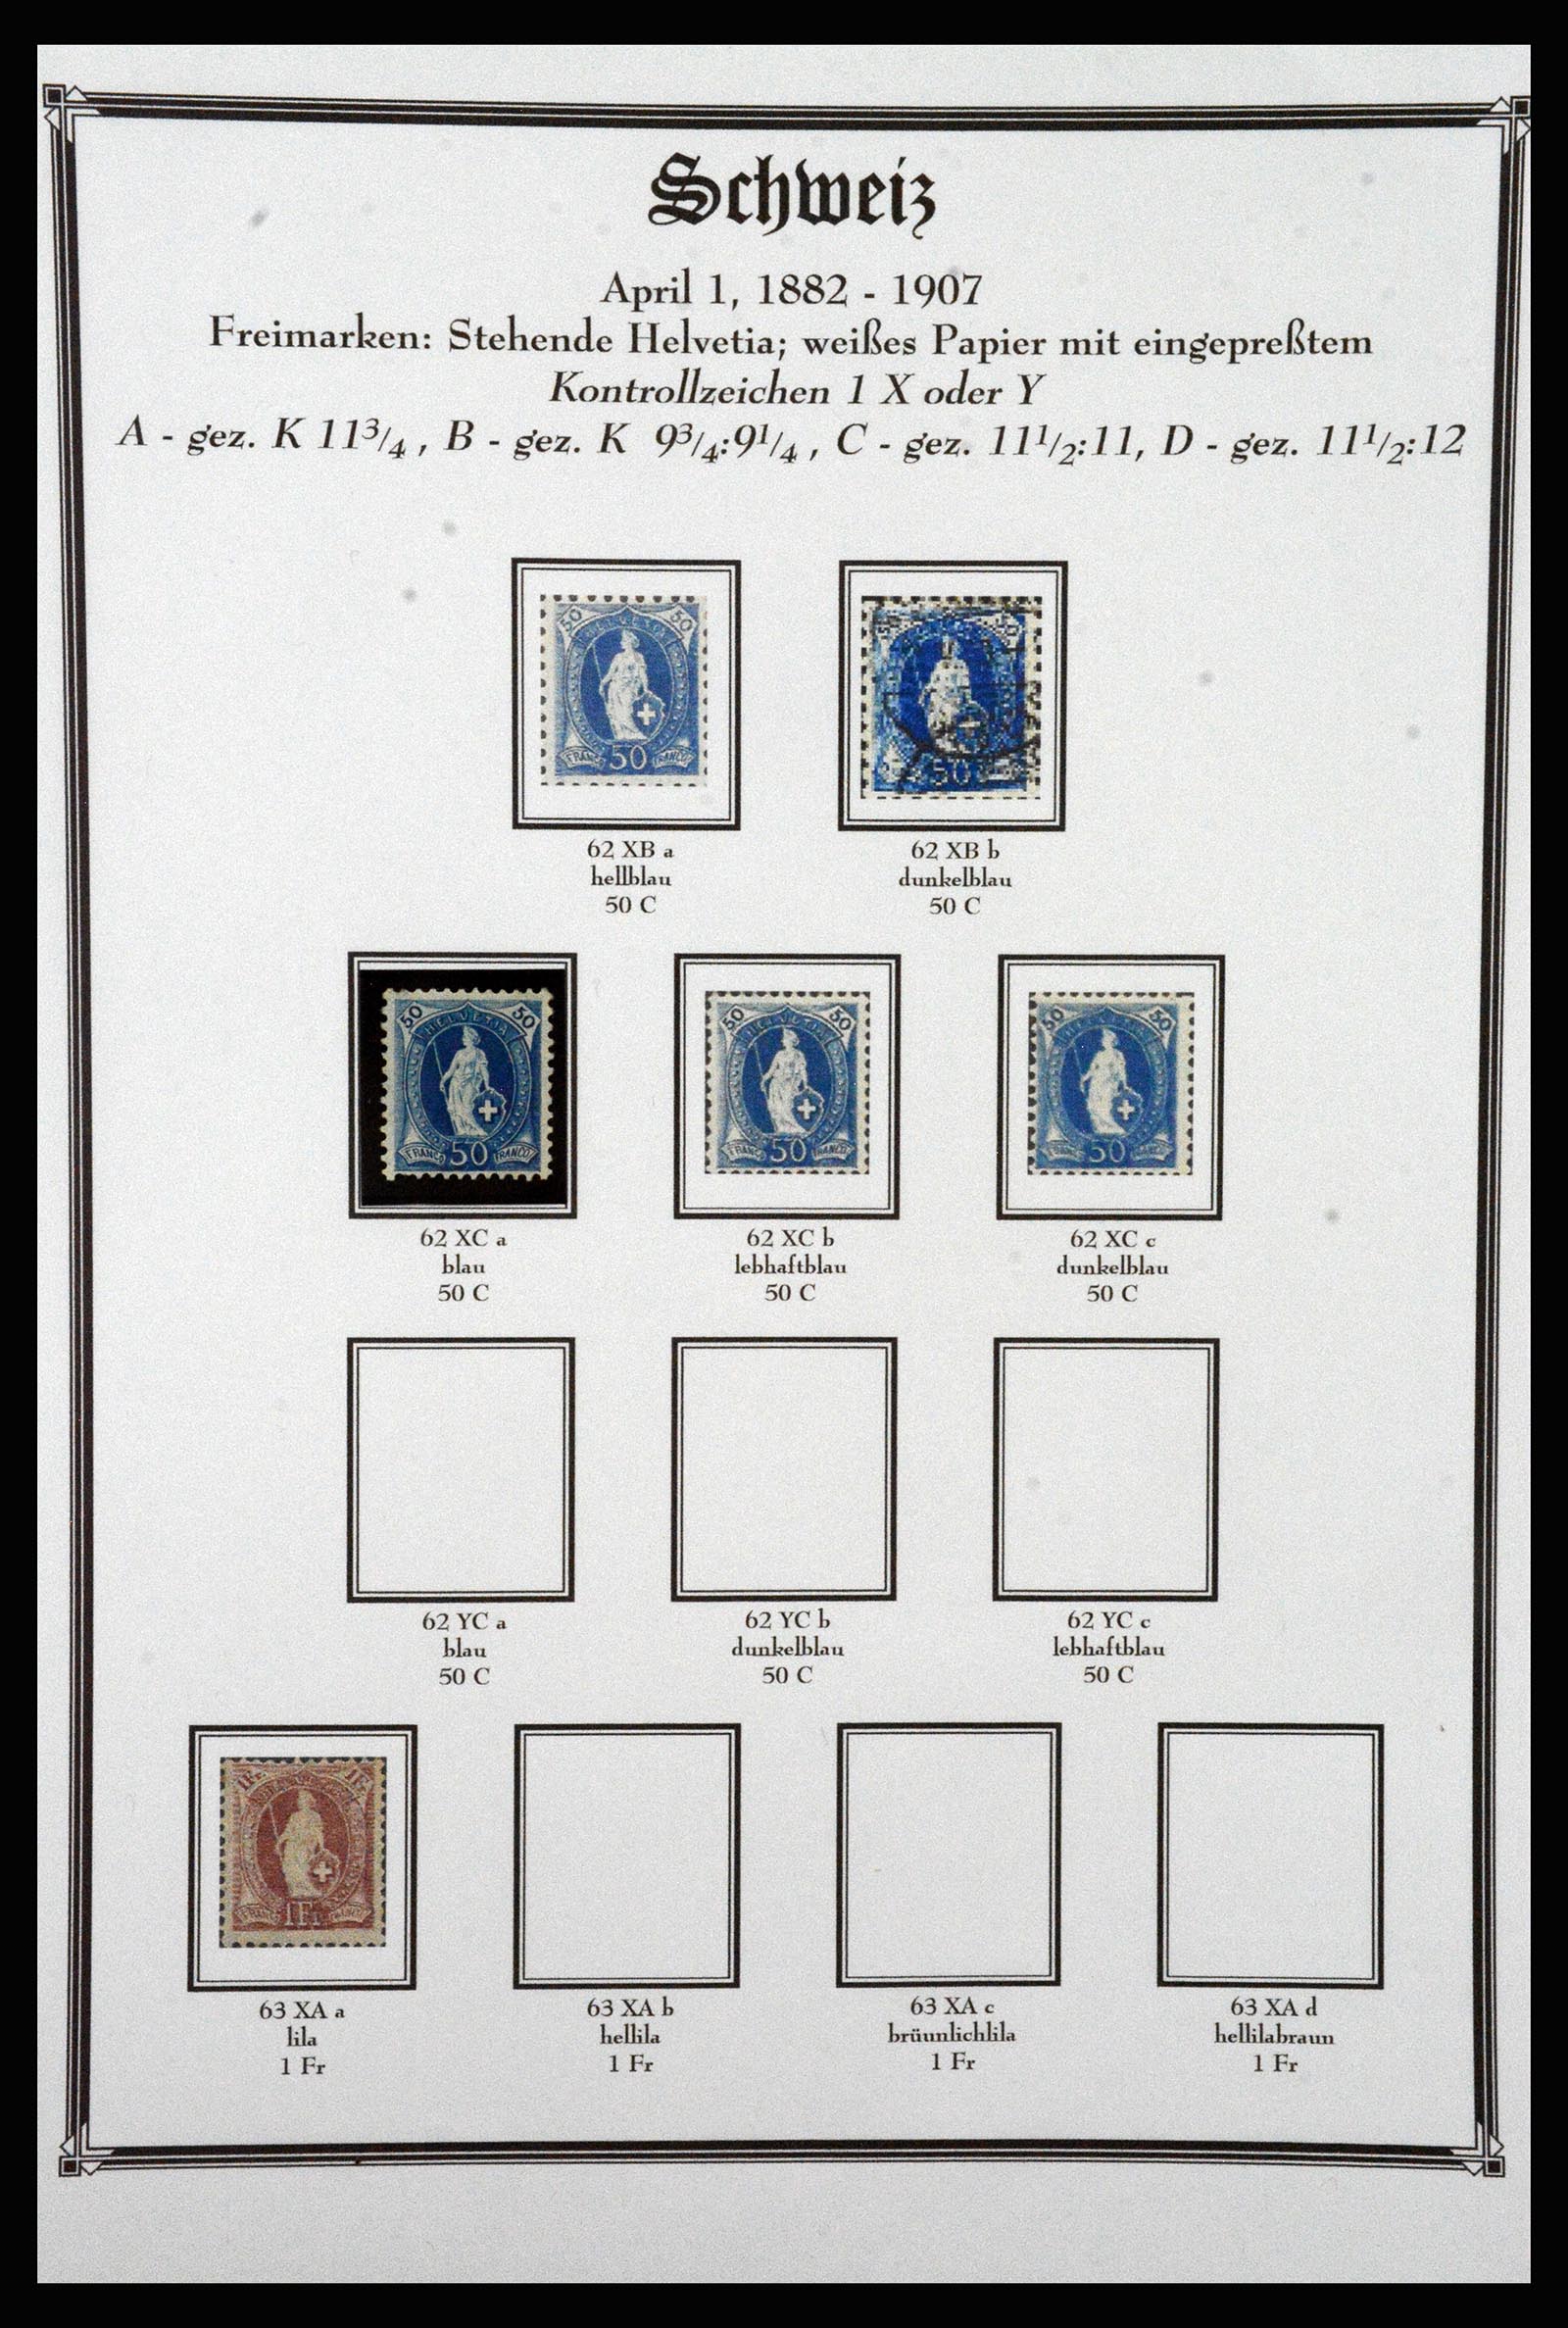 37159 017 - Stamp collection 37159 Switzerland 1862-2000.